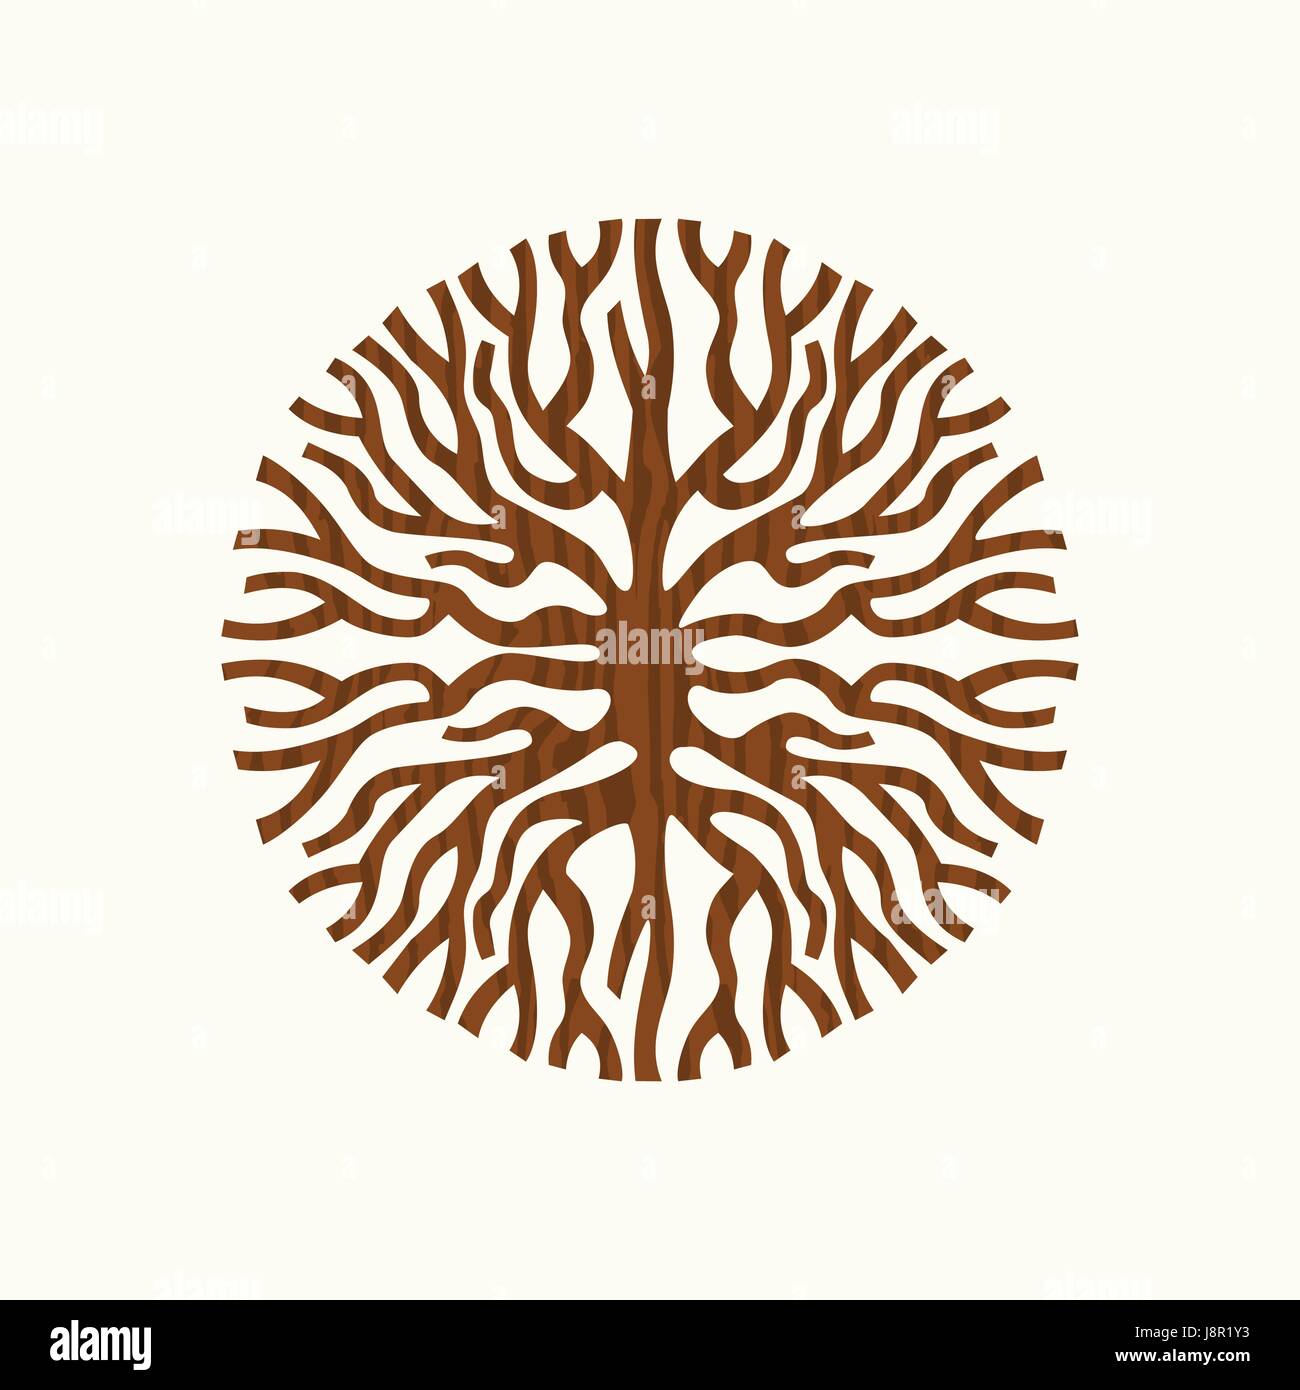 Abstrakte Kreisform der Baumwurzeln oder Zweige Illustration, kreative Natur-Kunst-Konzept-Symbol. EPS10 Vektor. Stock Vektor